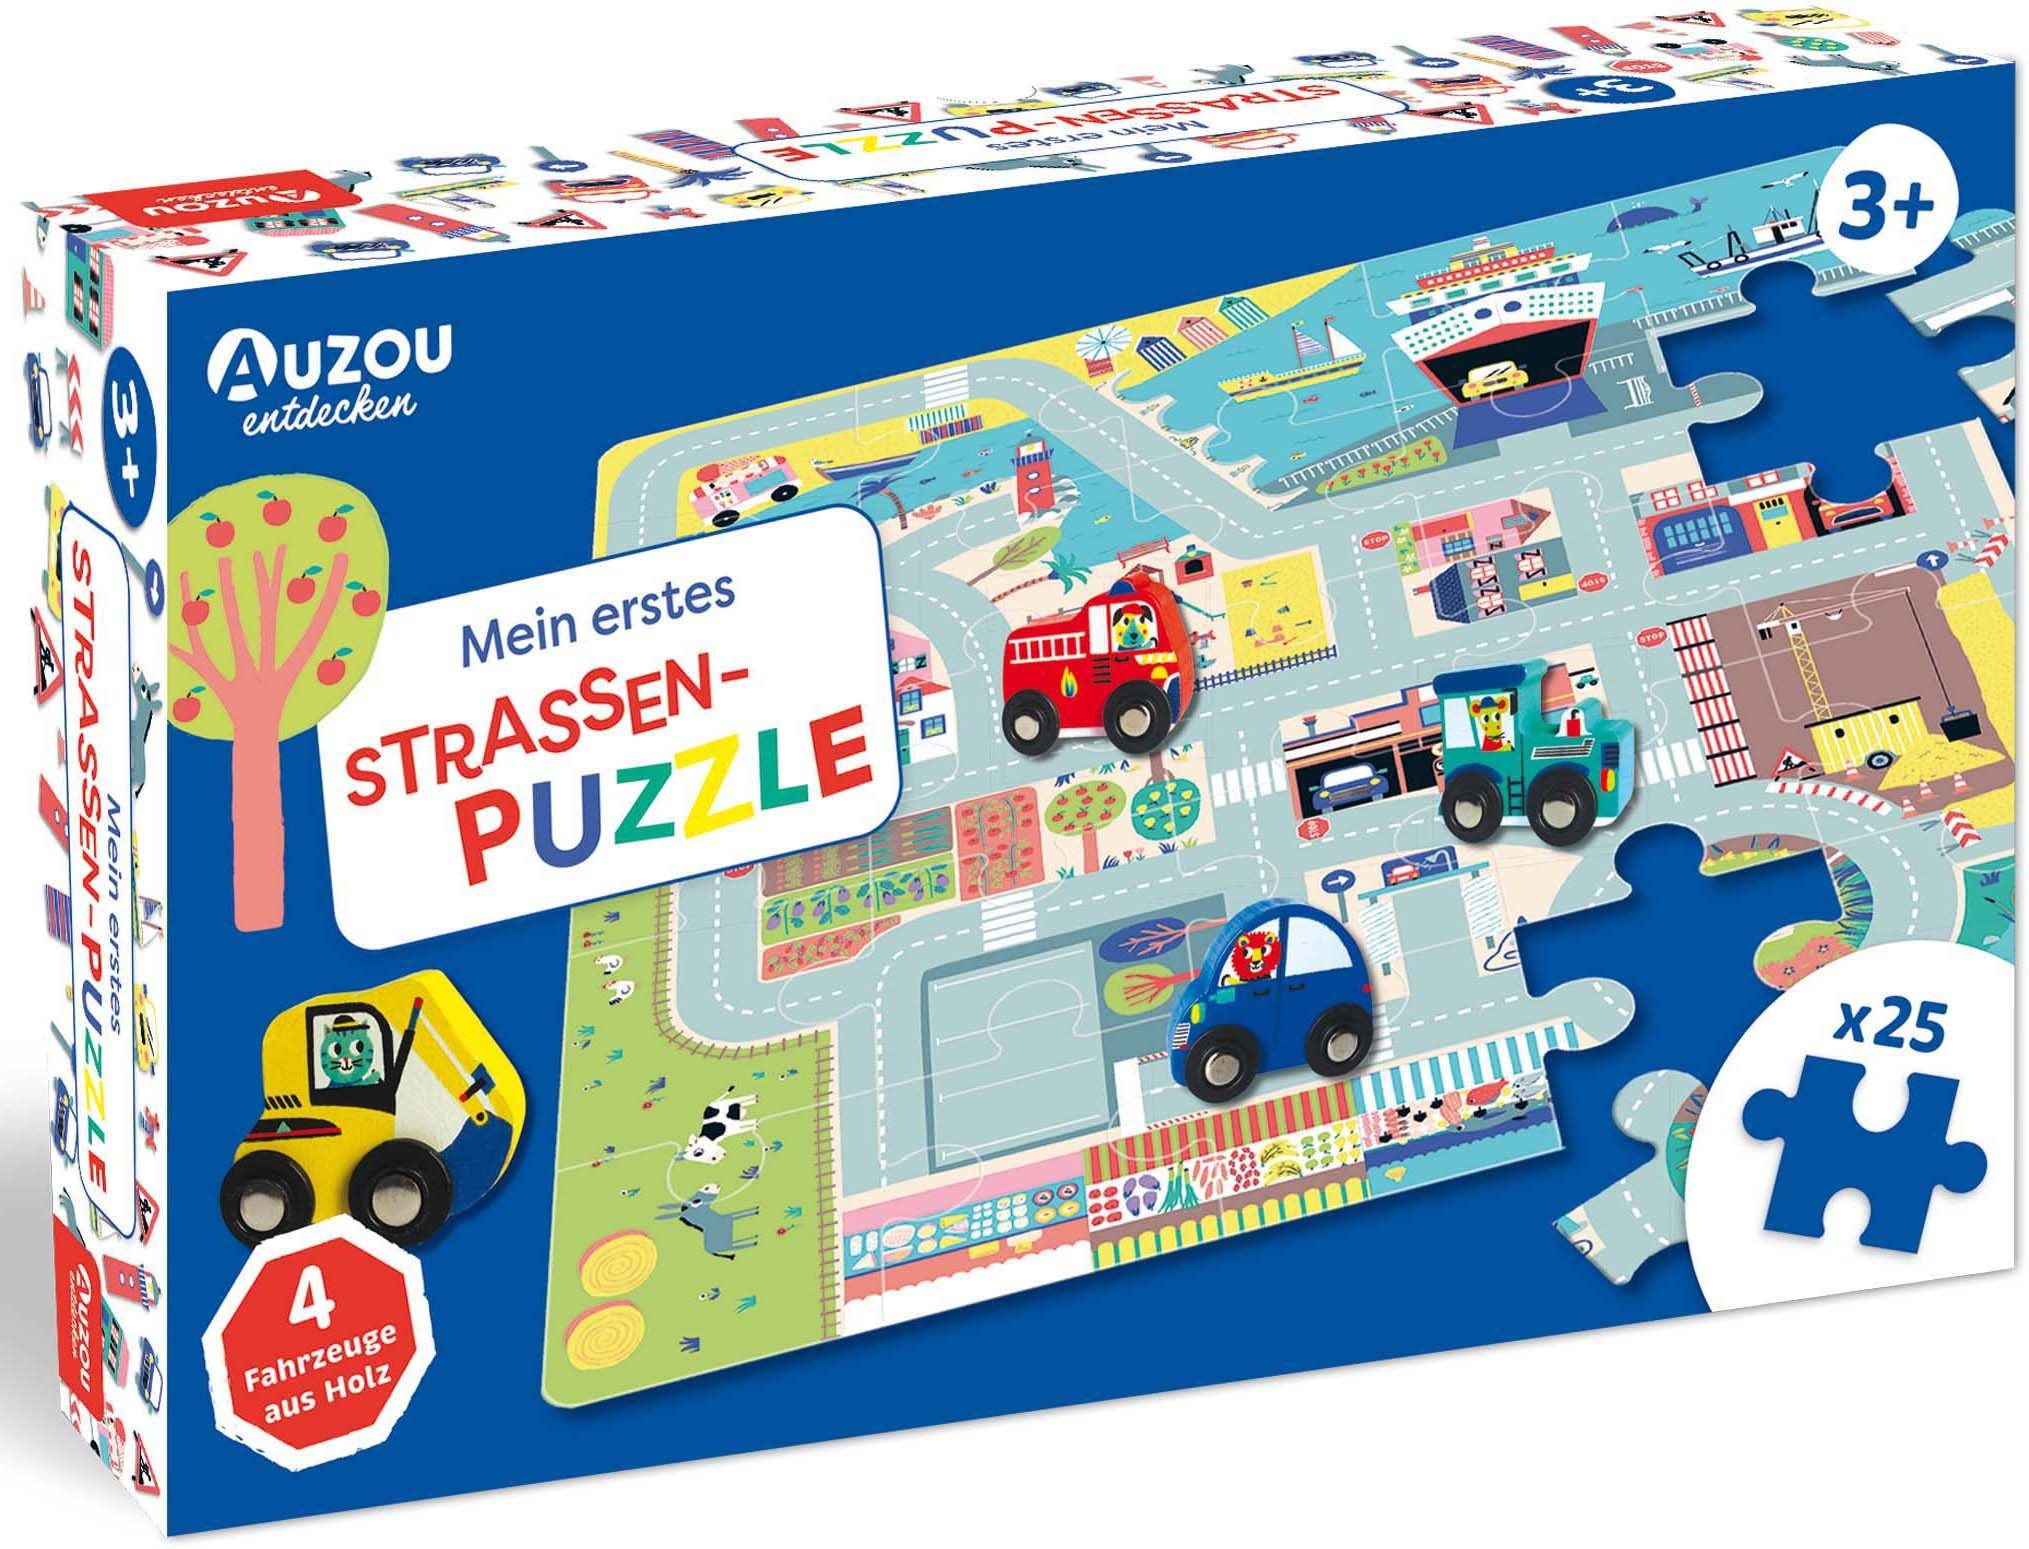 AUZOU Mein Puzzle erstes Holzspielzeug, 25 Straßenpuzzle, Puzzleteile